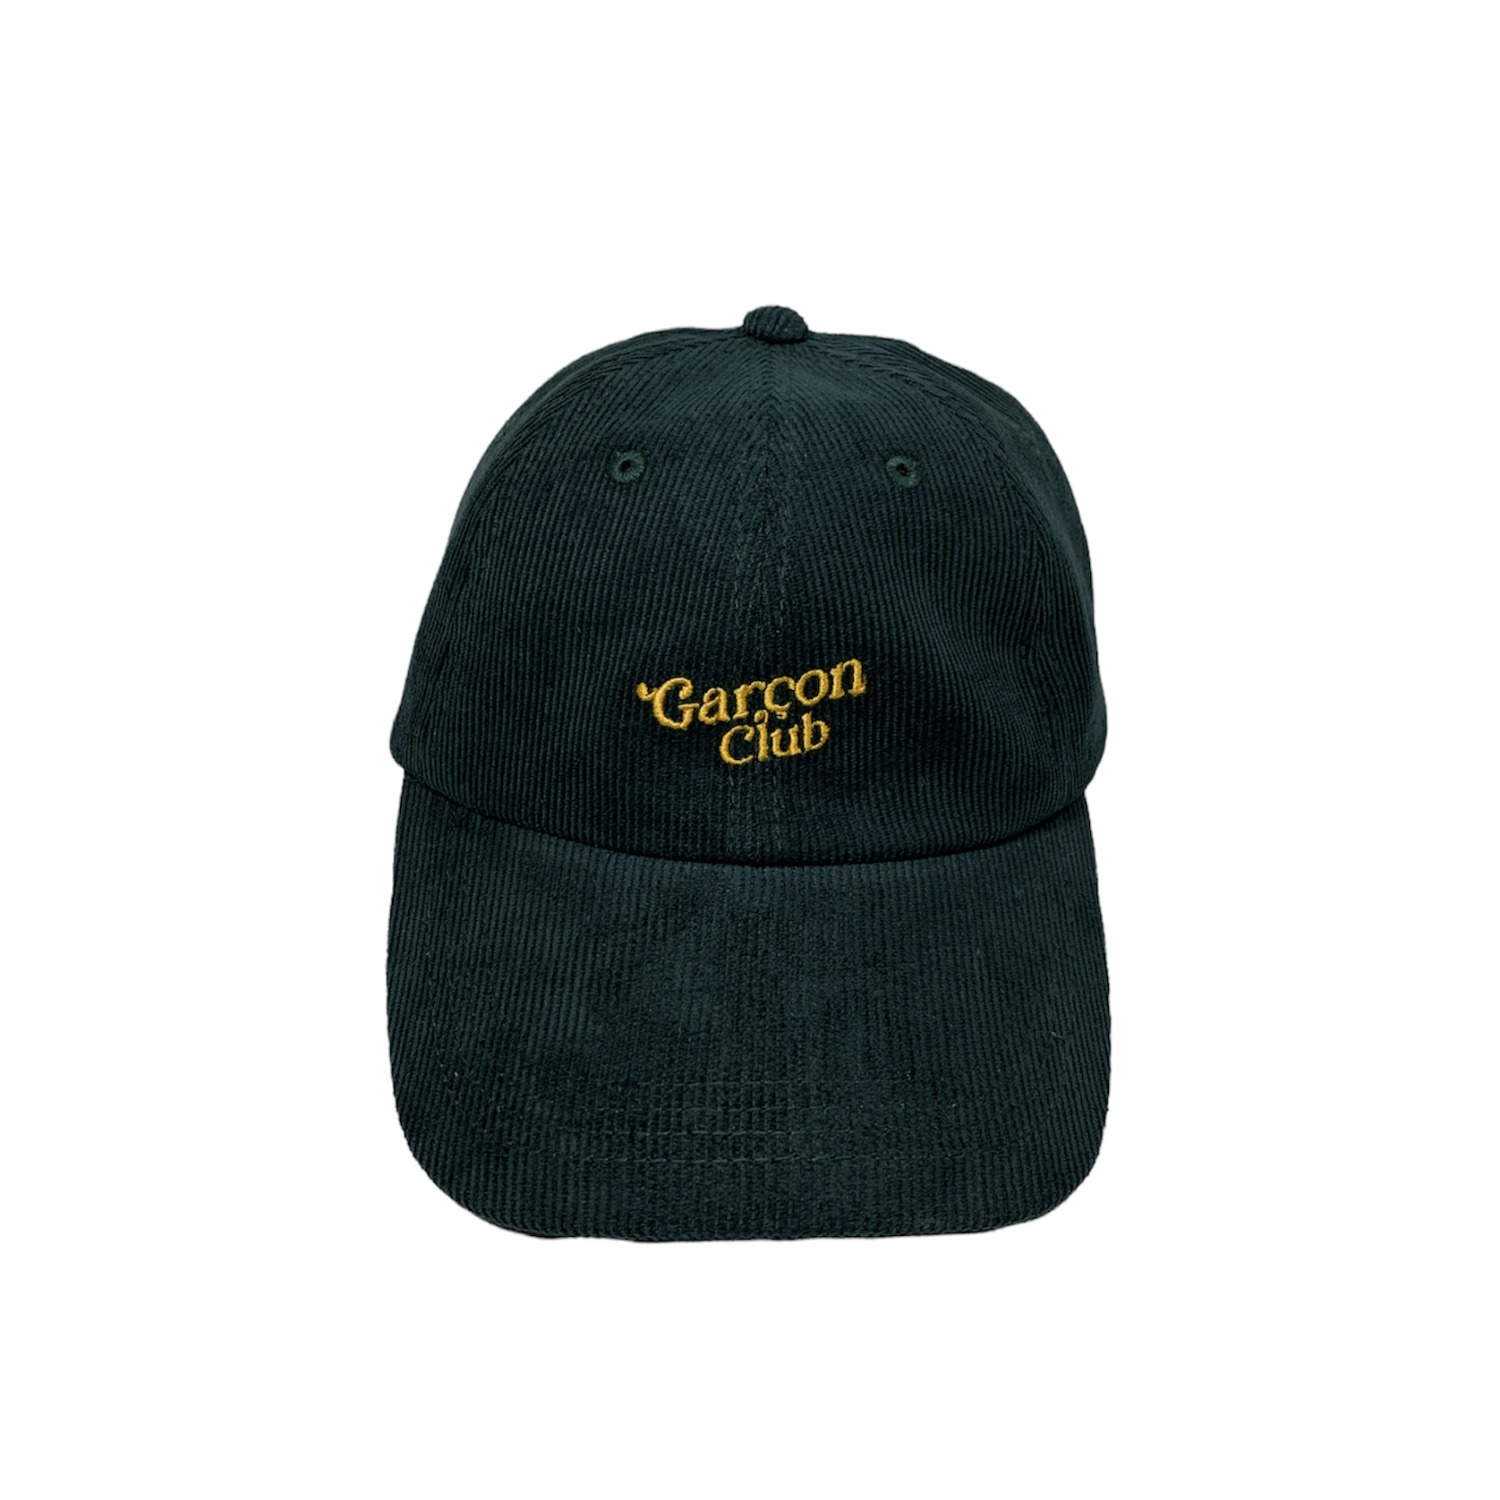 Garcon Club Cap (Forest Green)